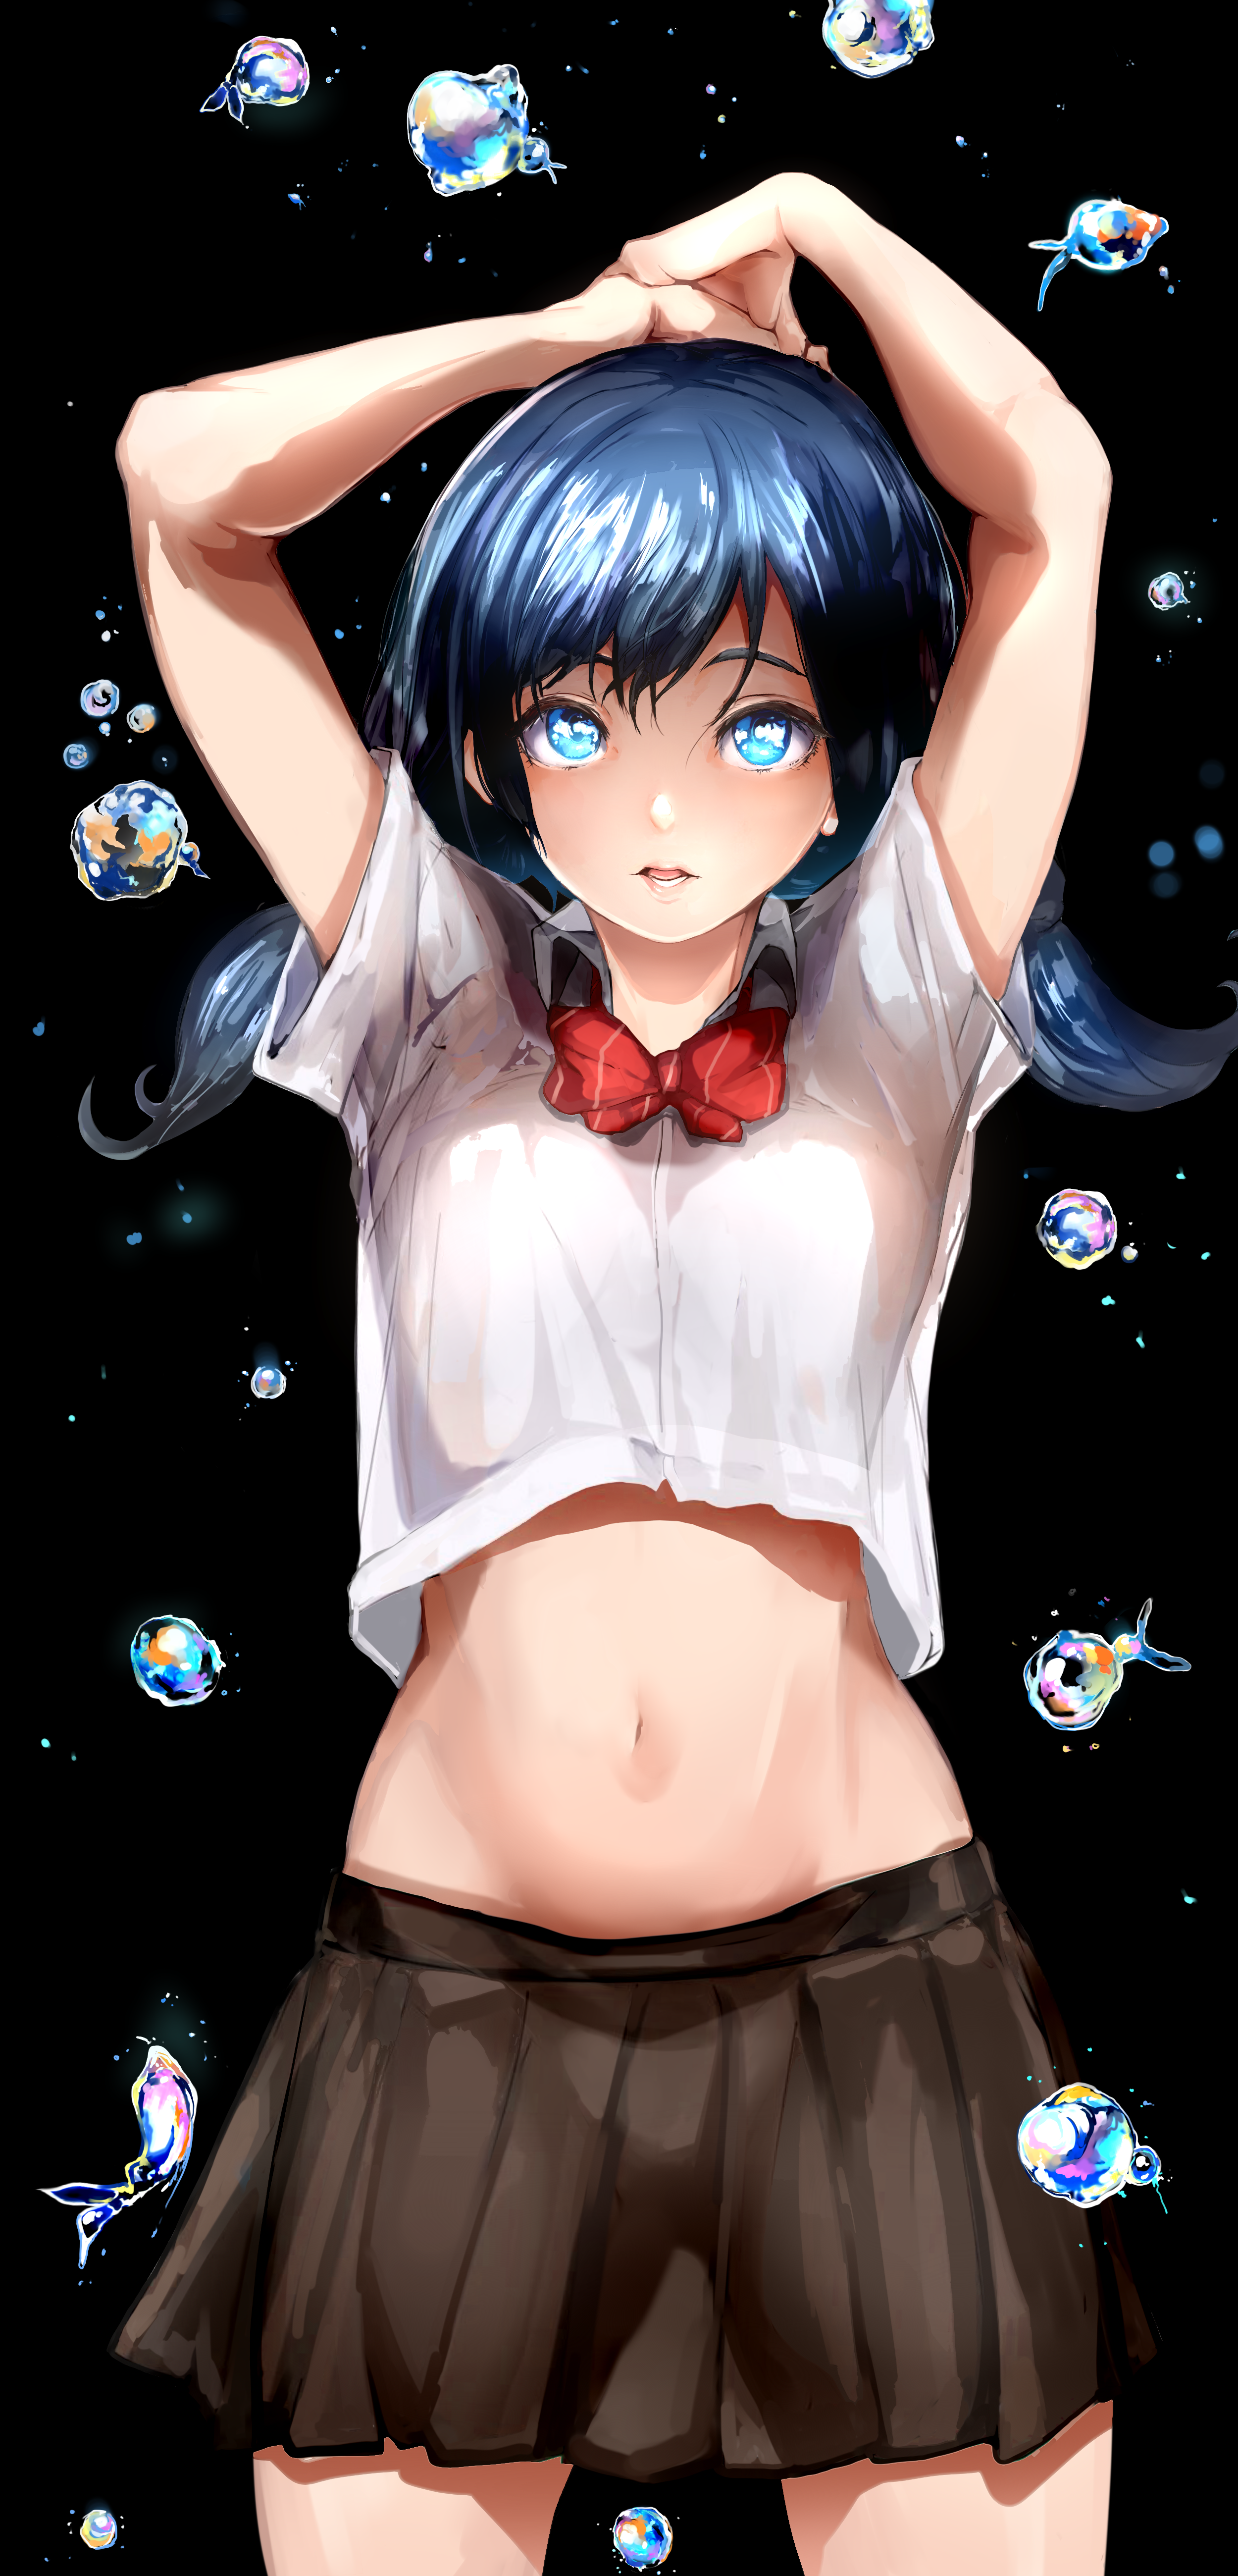 Anime 2500x5200 2D artwork Mamimi anime girls school uniform belly dark hair blue eyes see-through clothing arms up